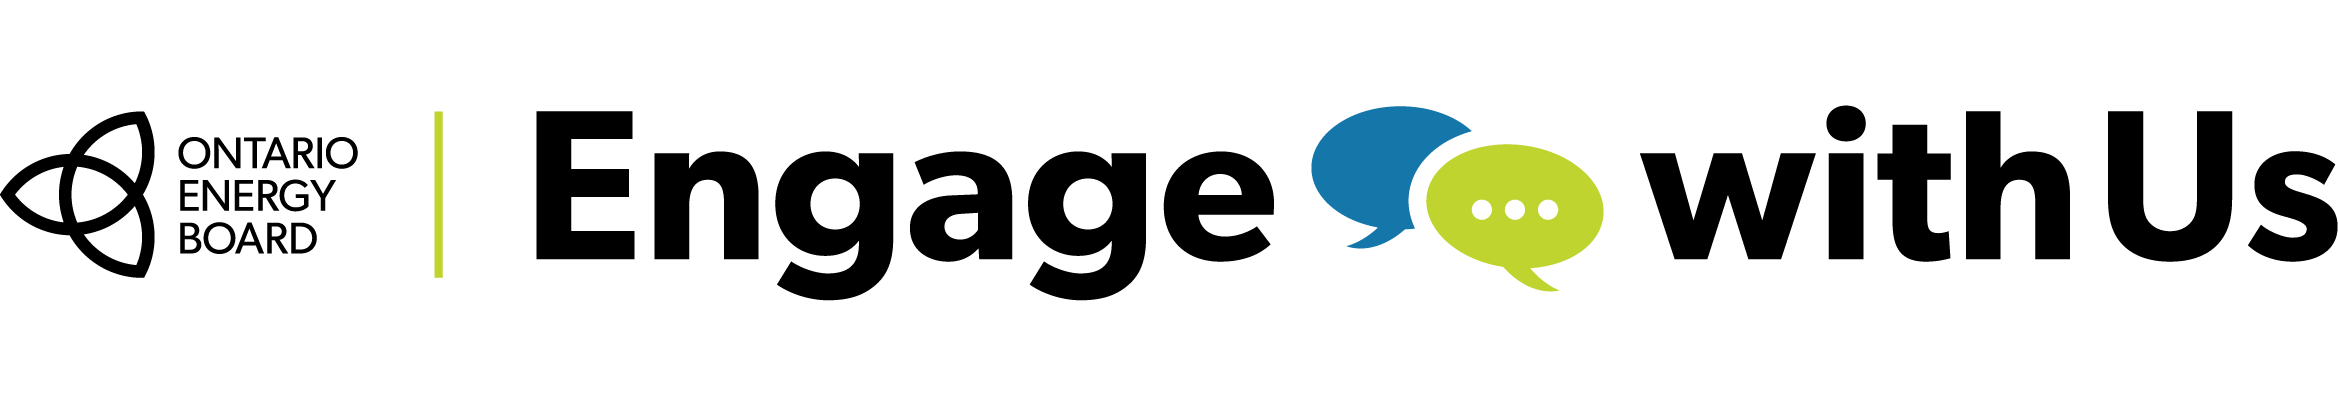 Engage with Us logo